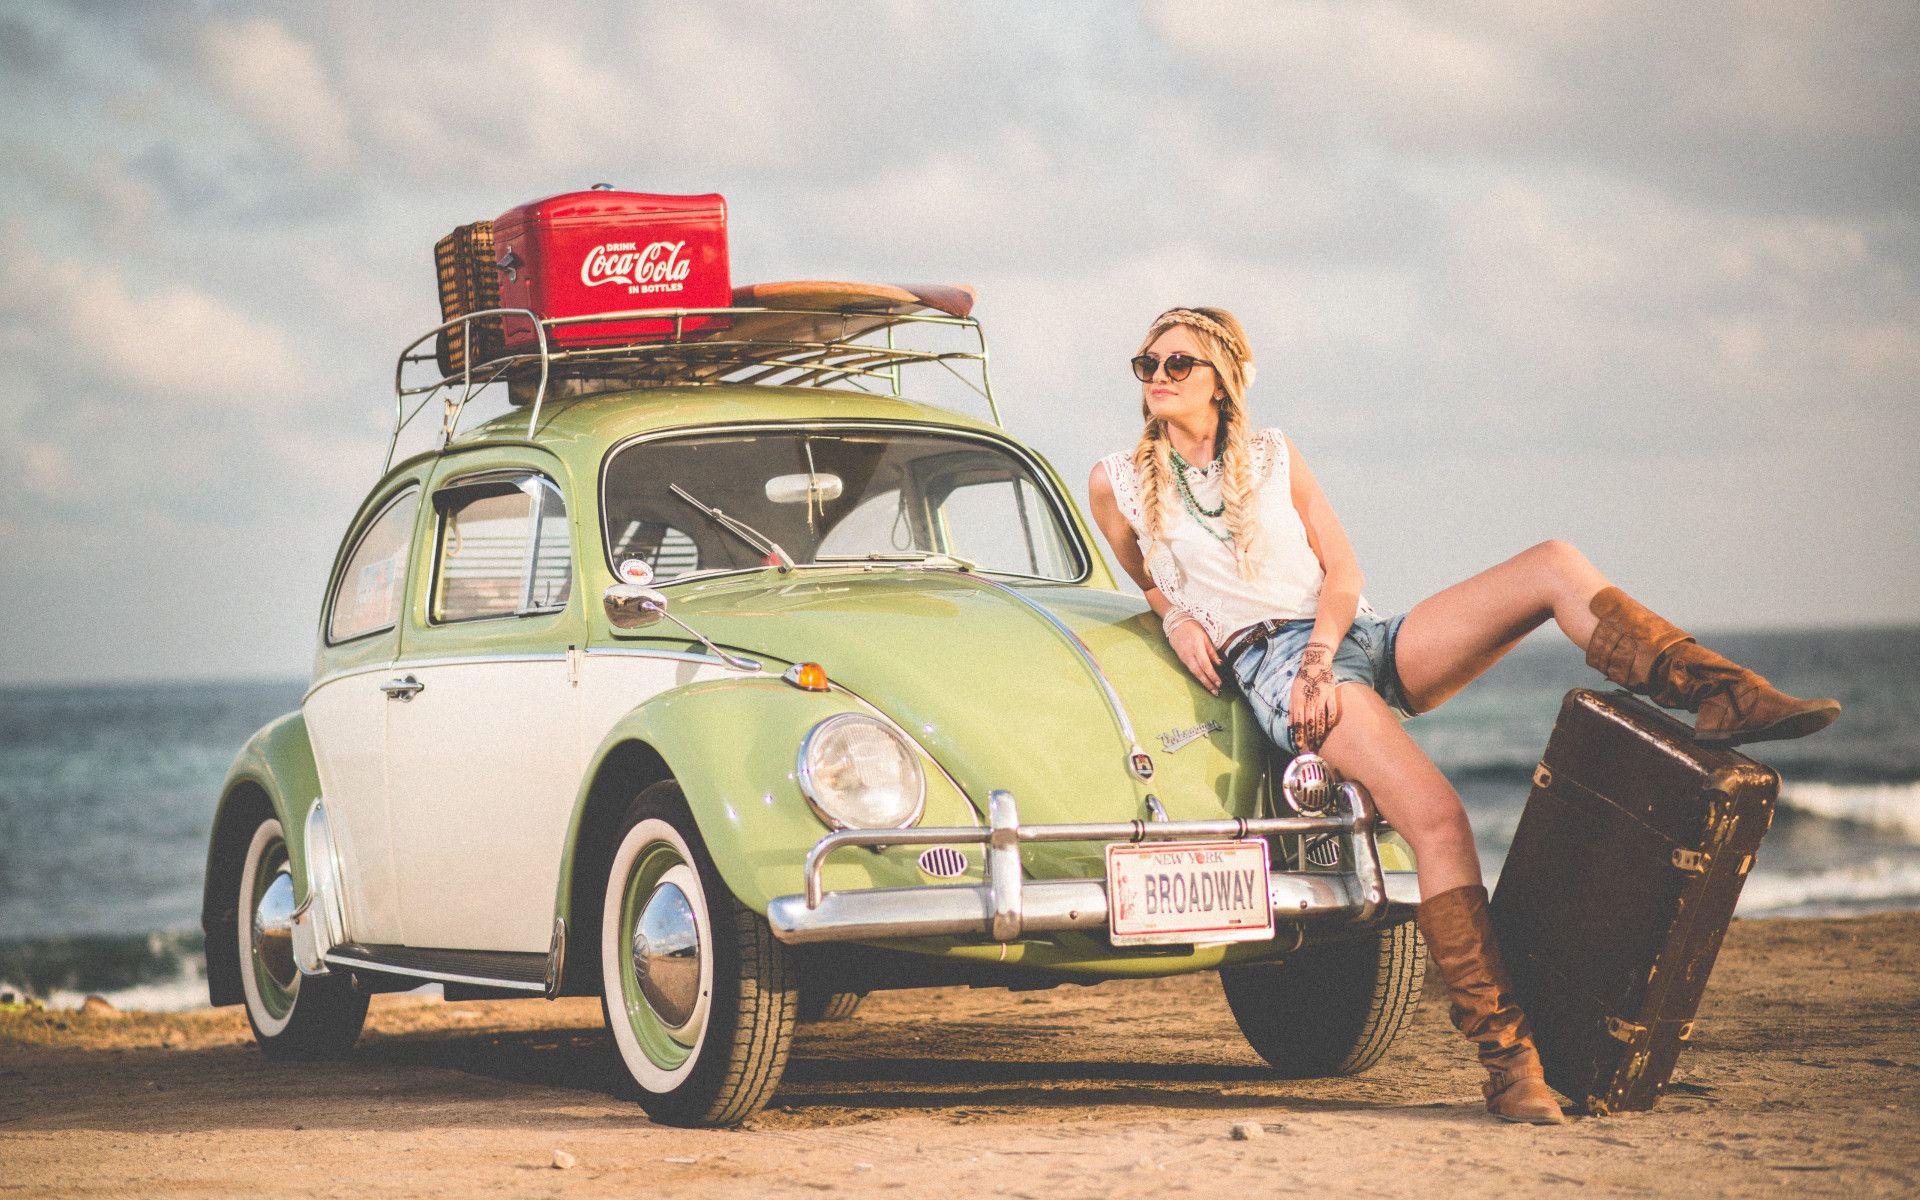 Download wallpaper: VW Beetle, blonde girl, model, travel 1920x1200